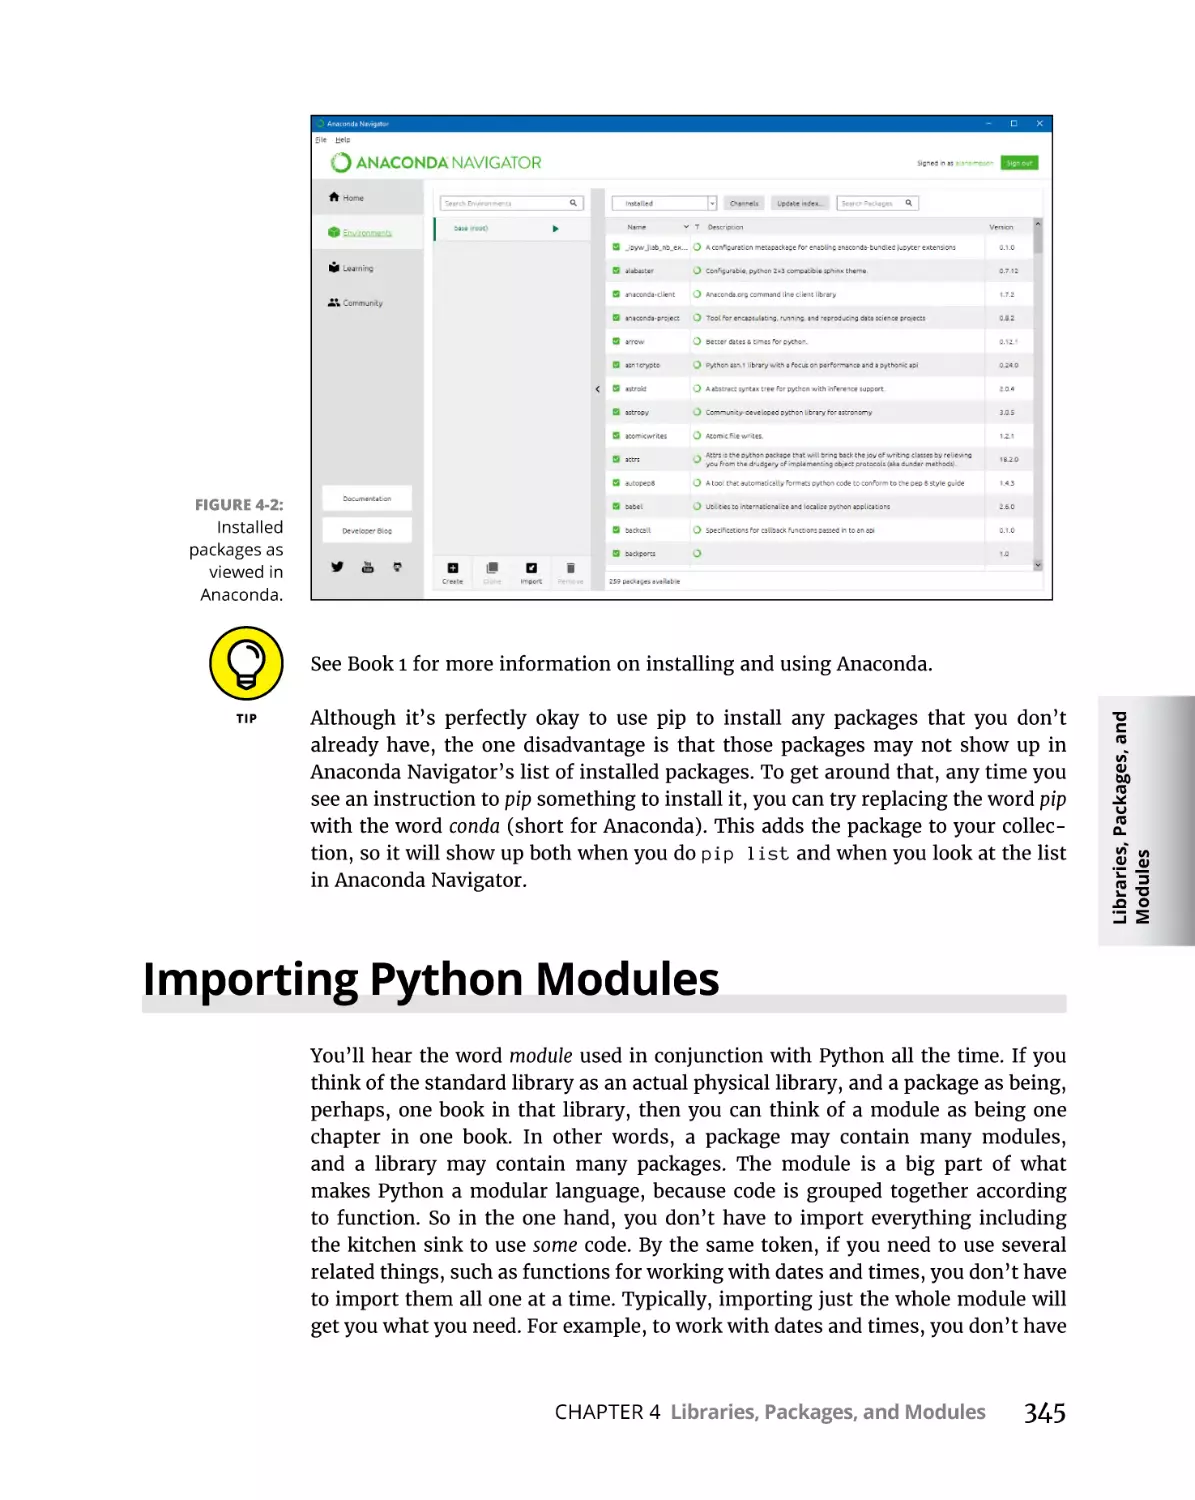 Importing Python Modules